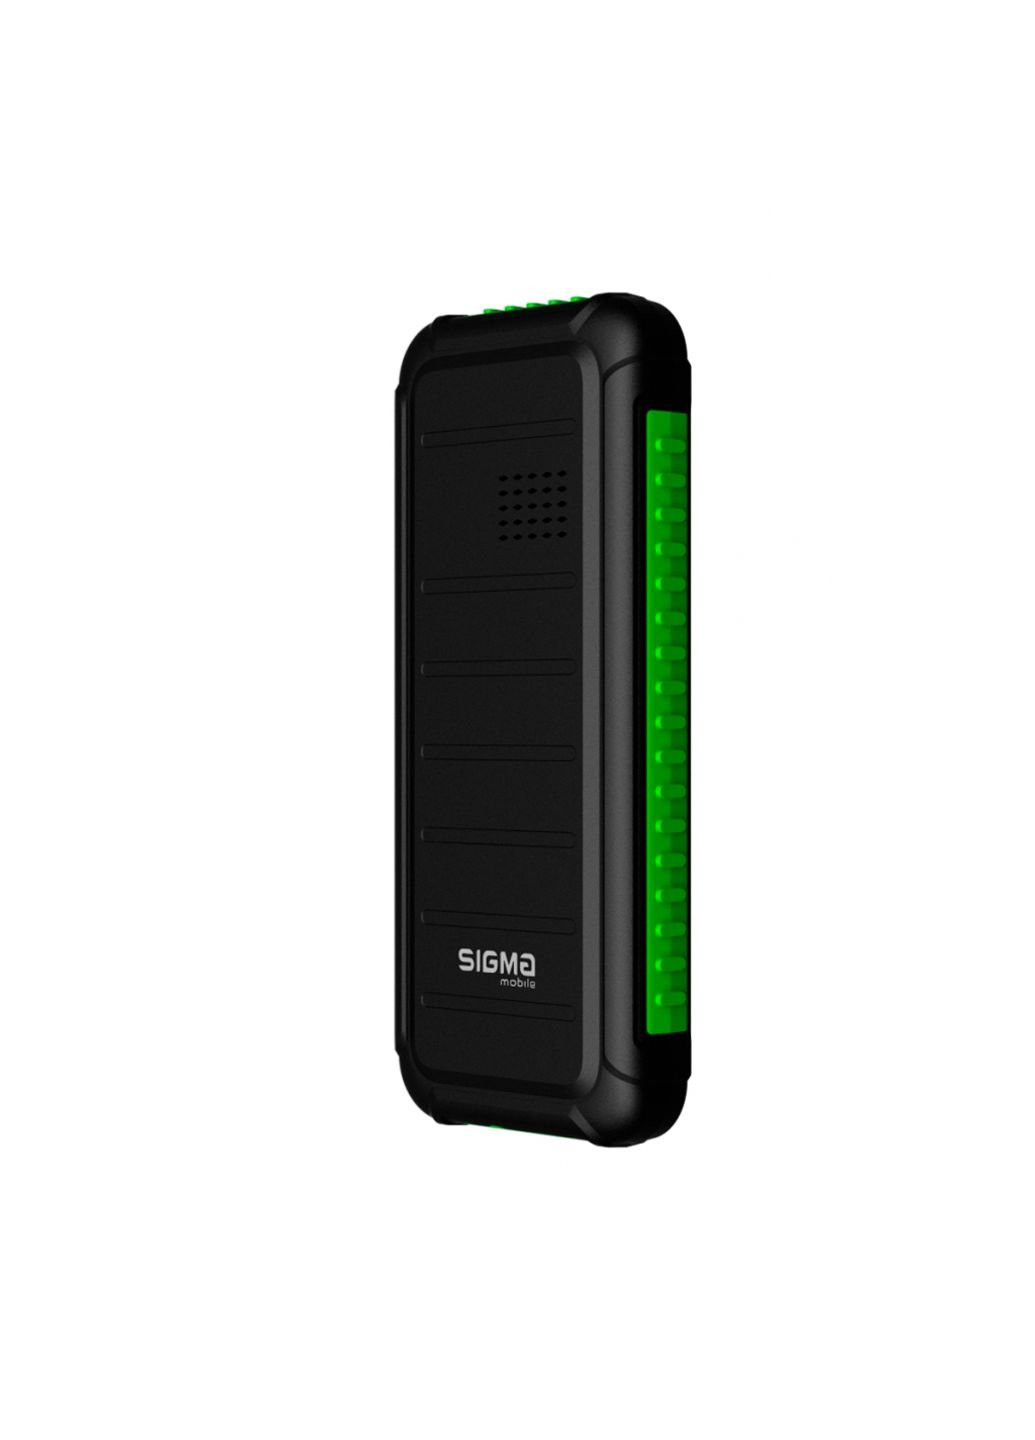 Мобильный телефон (4827798854433) Sigma x-style 18 track black-green (253507609)